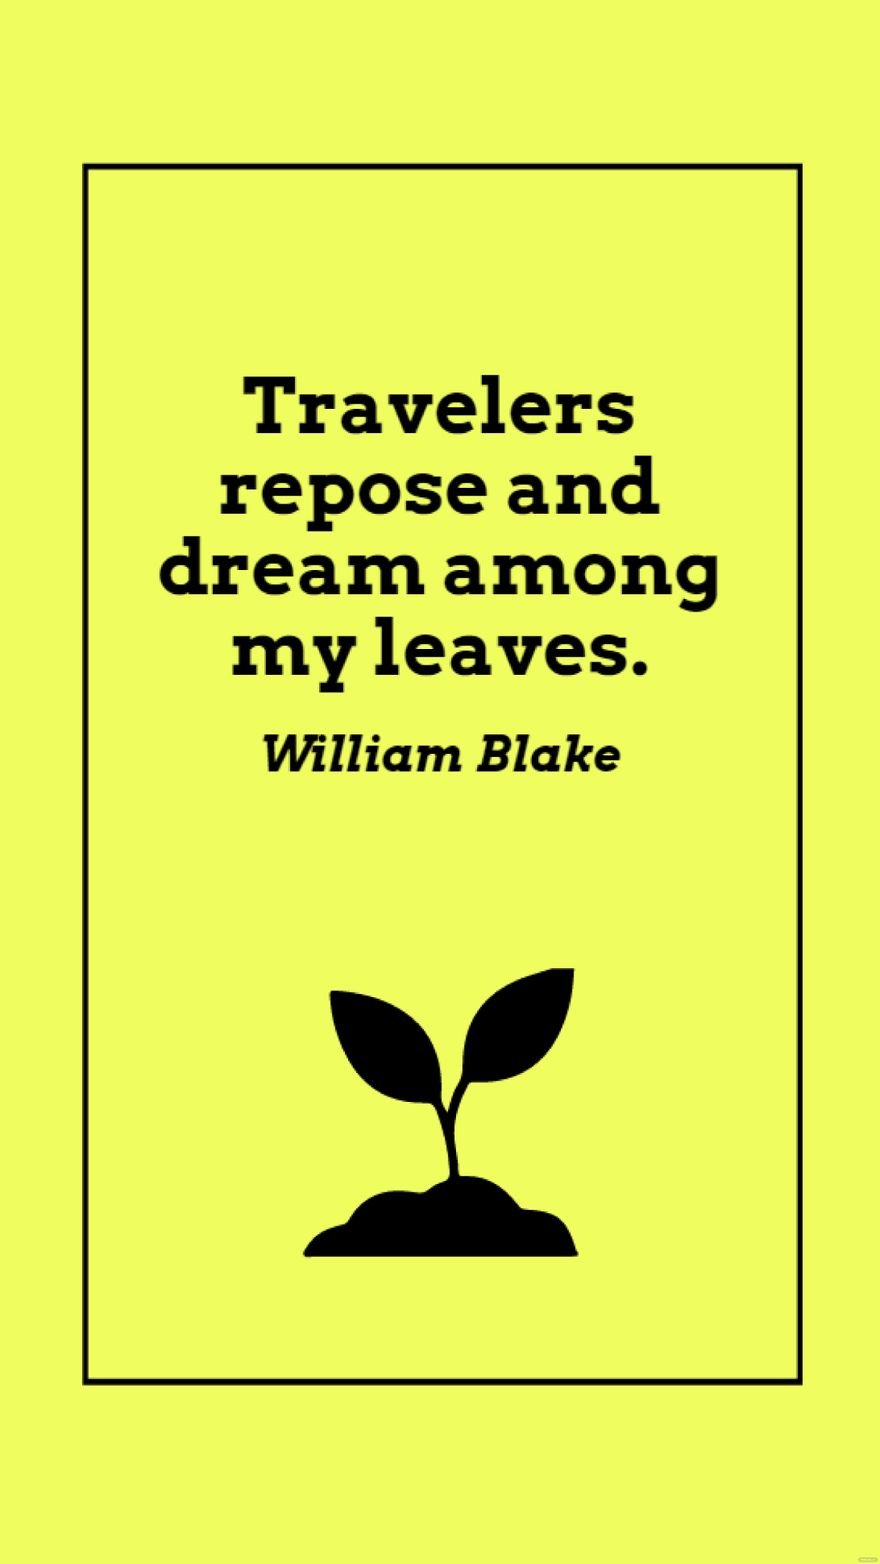 Free William Blake - Travelers repose and dream among my leaves. in JPG